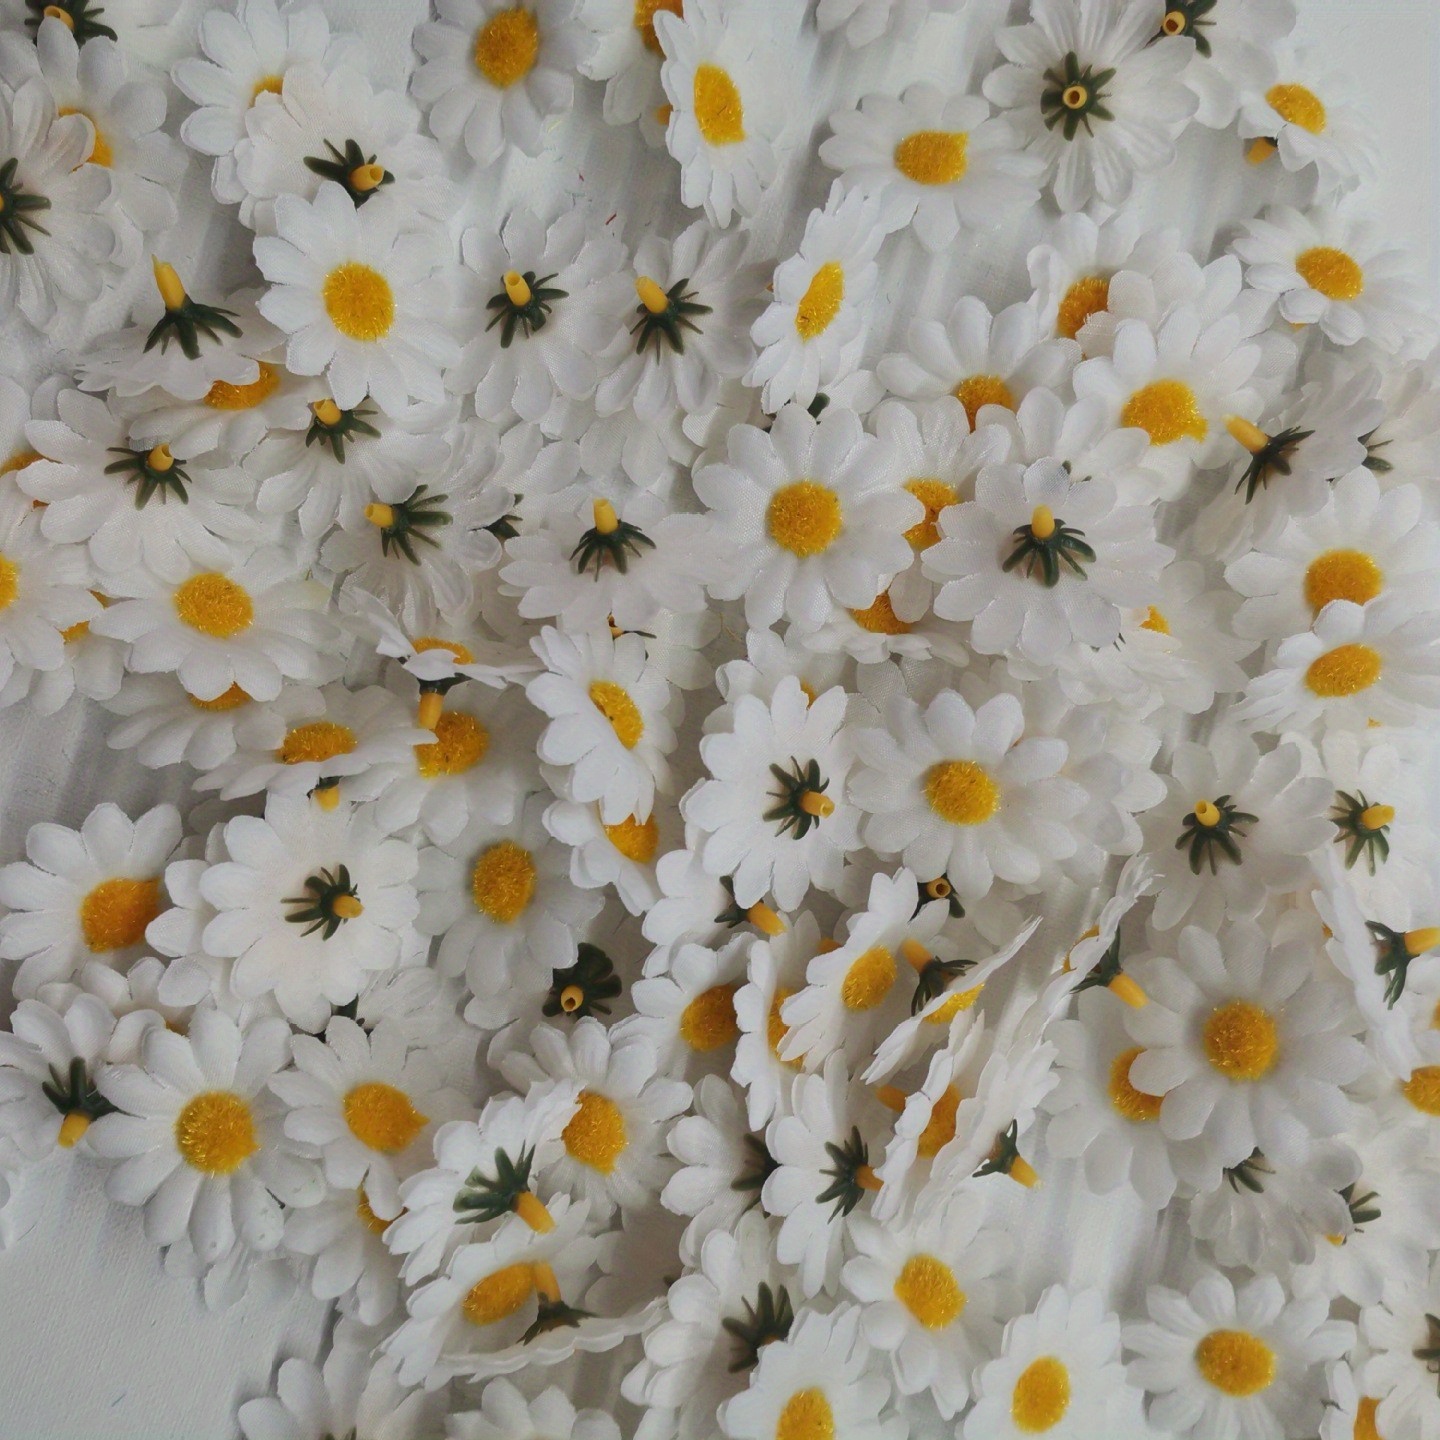 30CM Silk Daisy Small Fake Flowers Head For Wedding, DIY Wreath, Scrapbook,  And Craft Decoration From Nanguaguo, $10.65